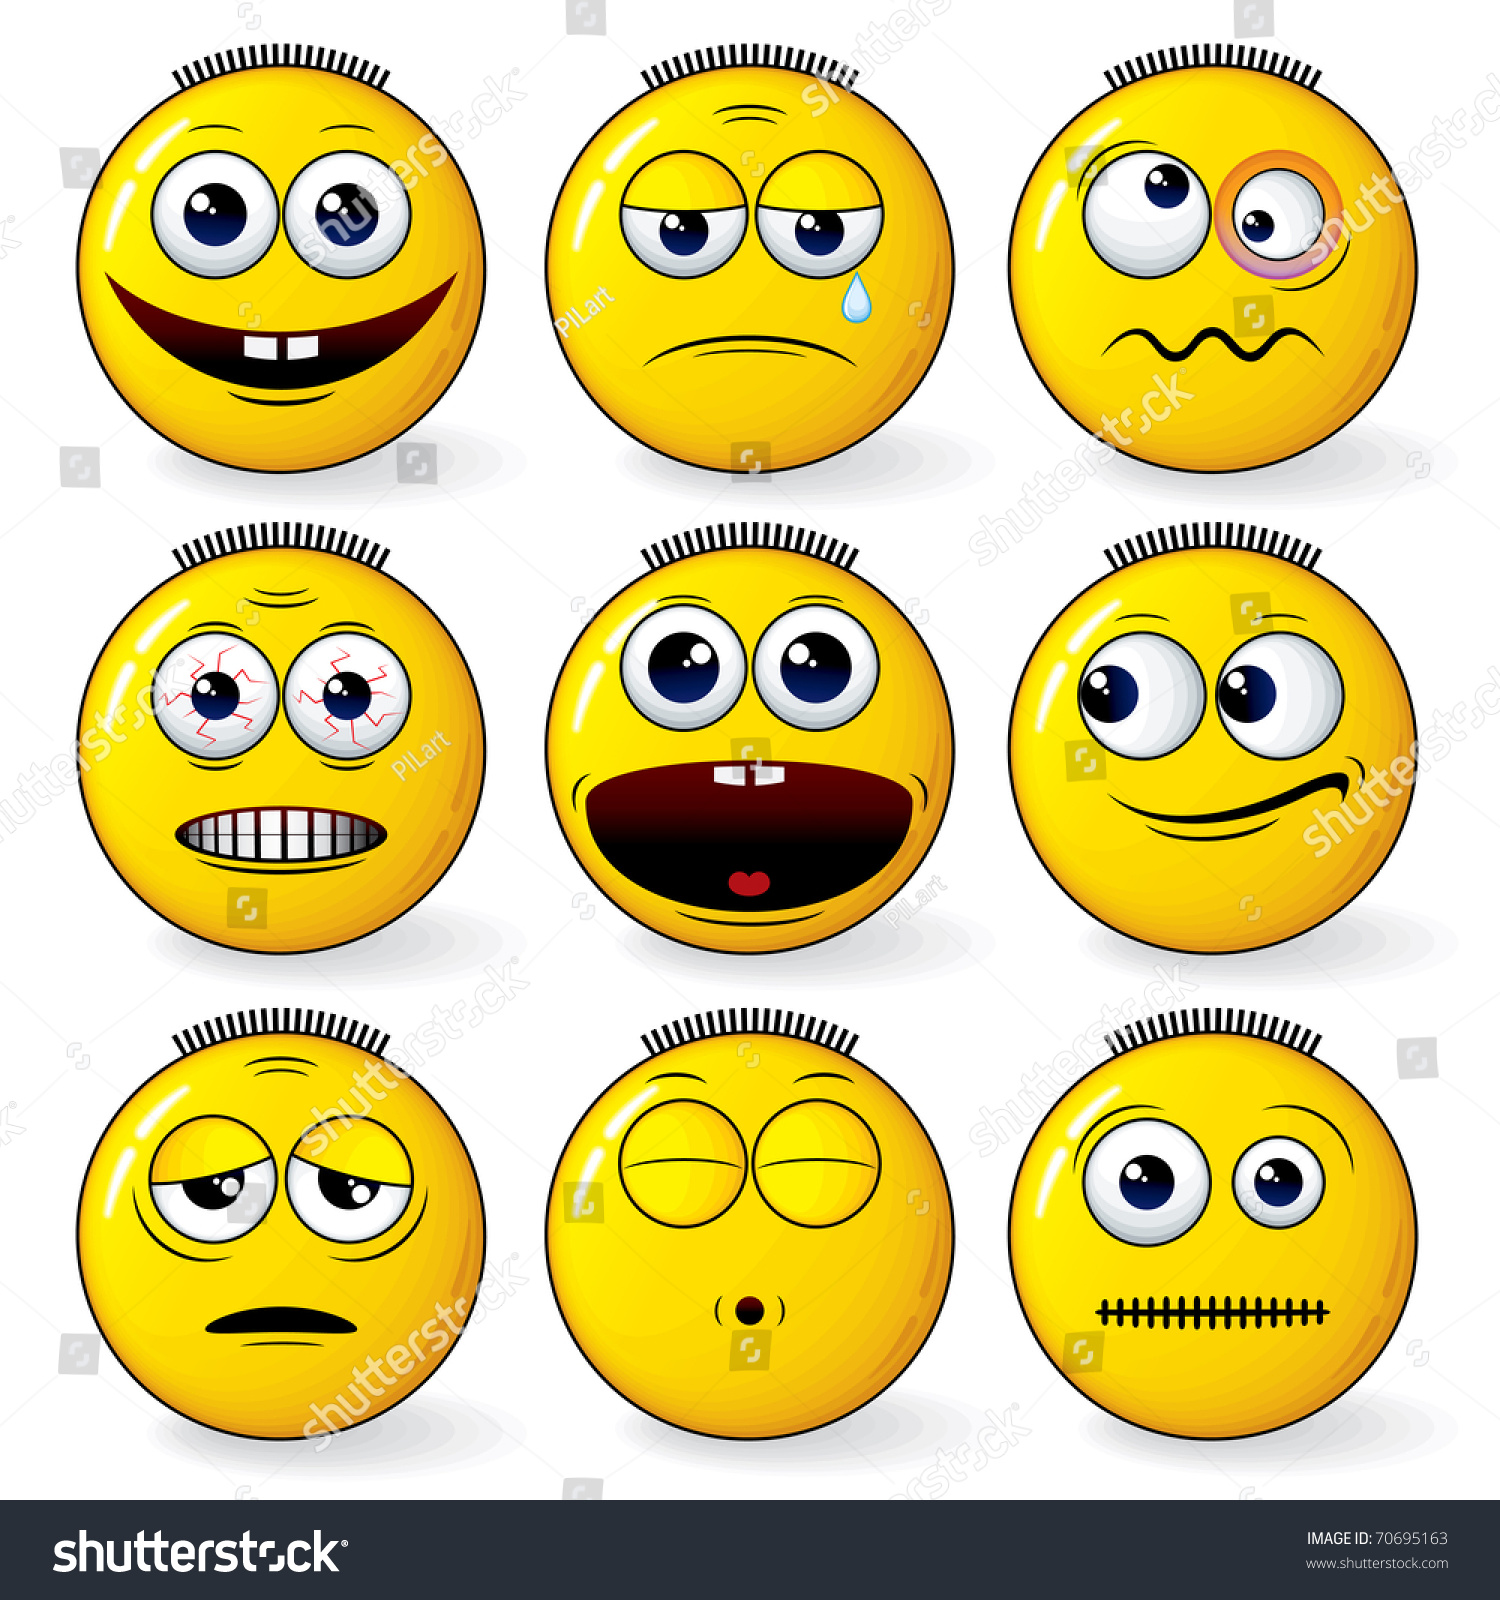 Yellow Smileys Set Stock Photo 70695163 : Shutterstock